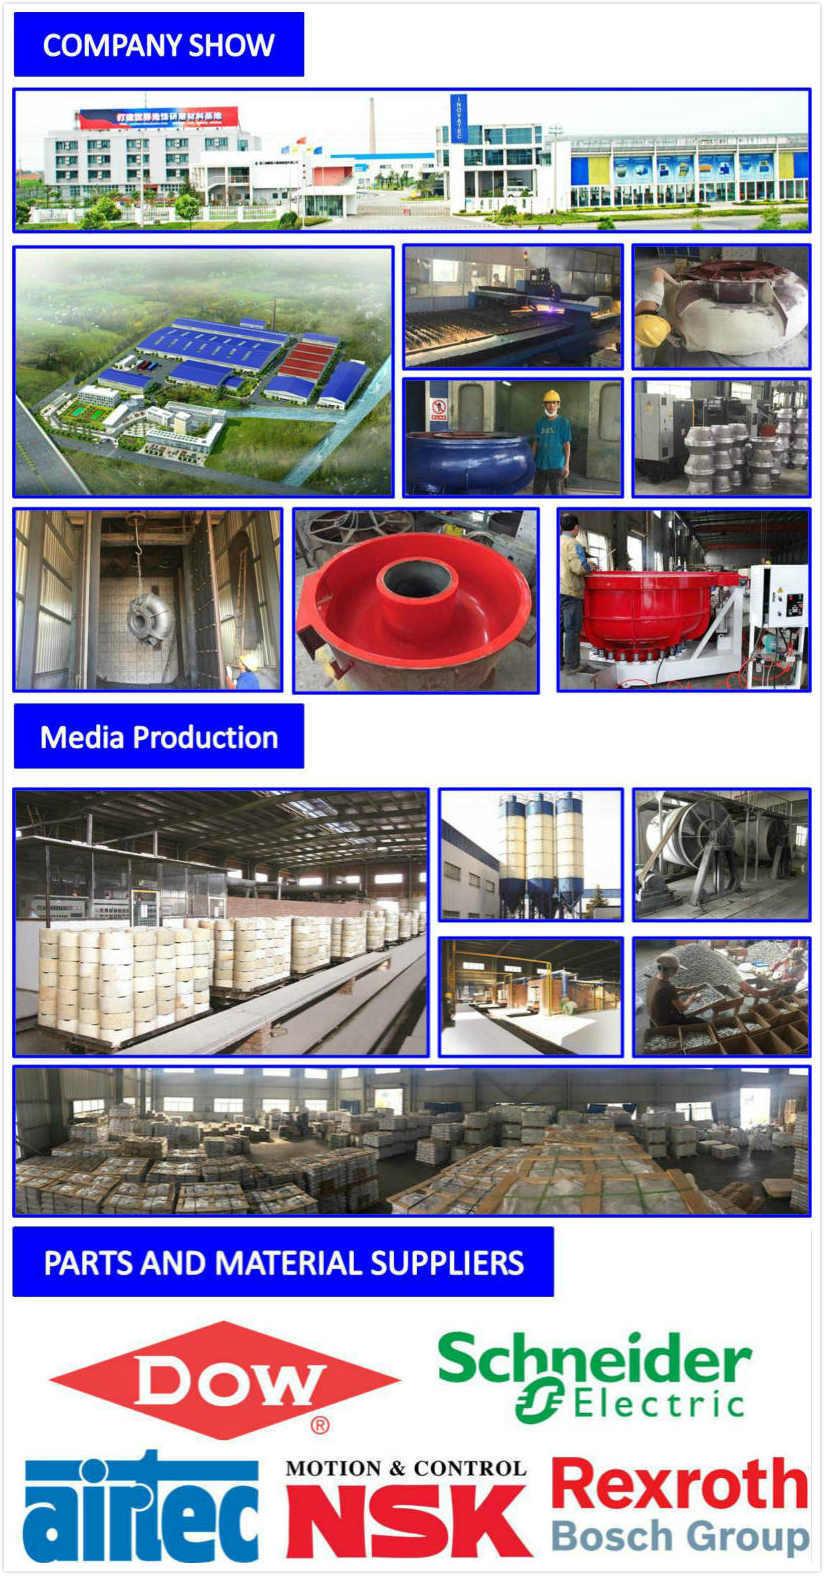 Ha-Bm Factory Price Cost-Saving Ceramic Polishing Media Korea Japan Vietnam